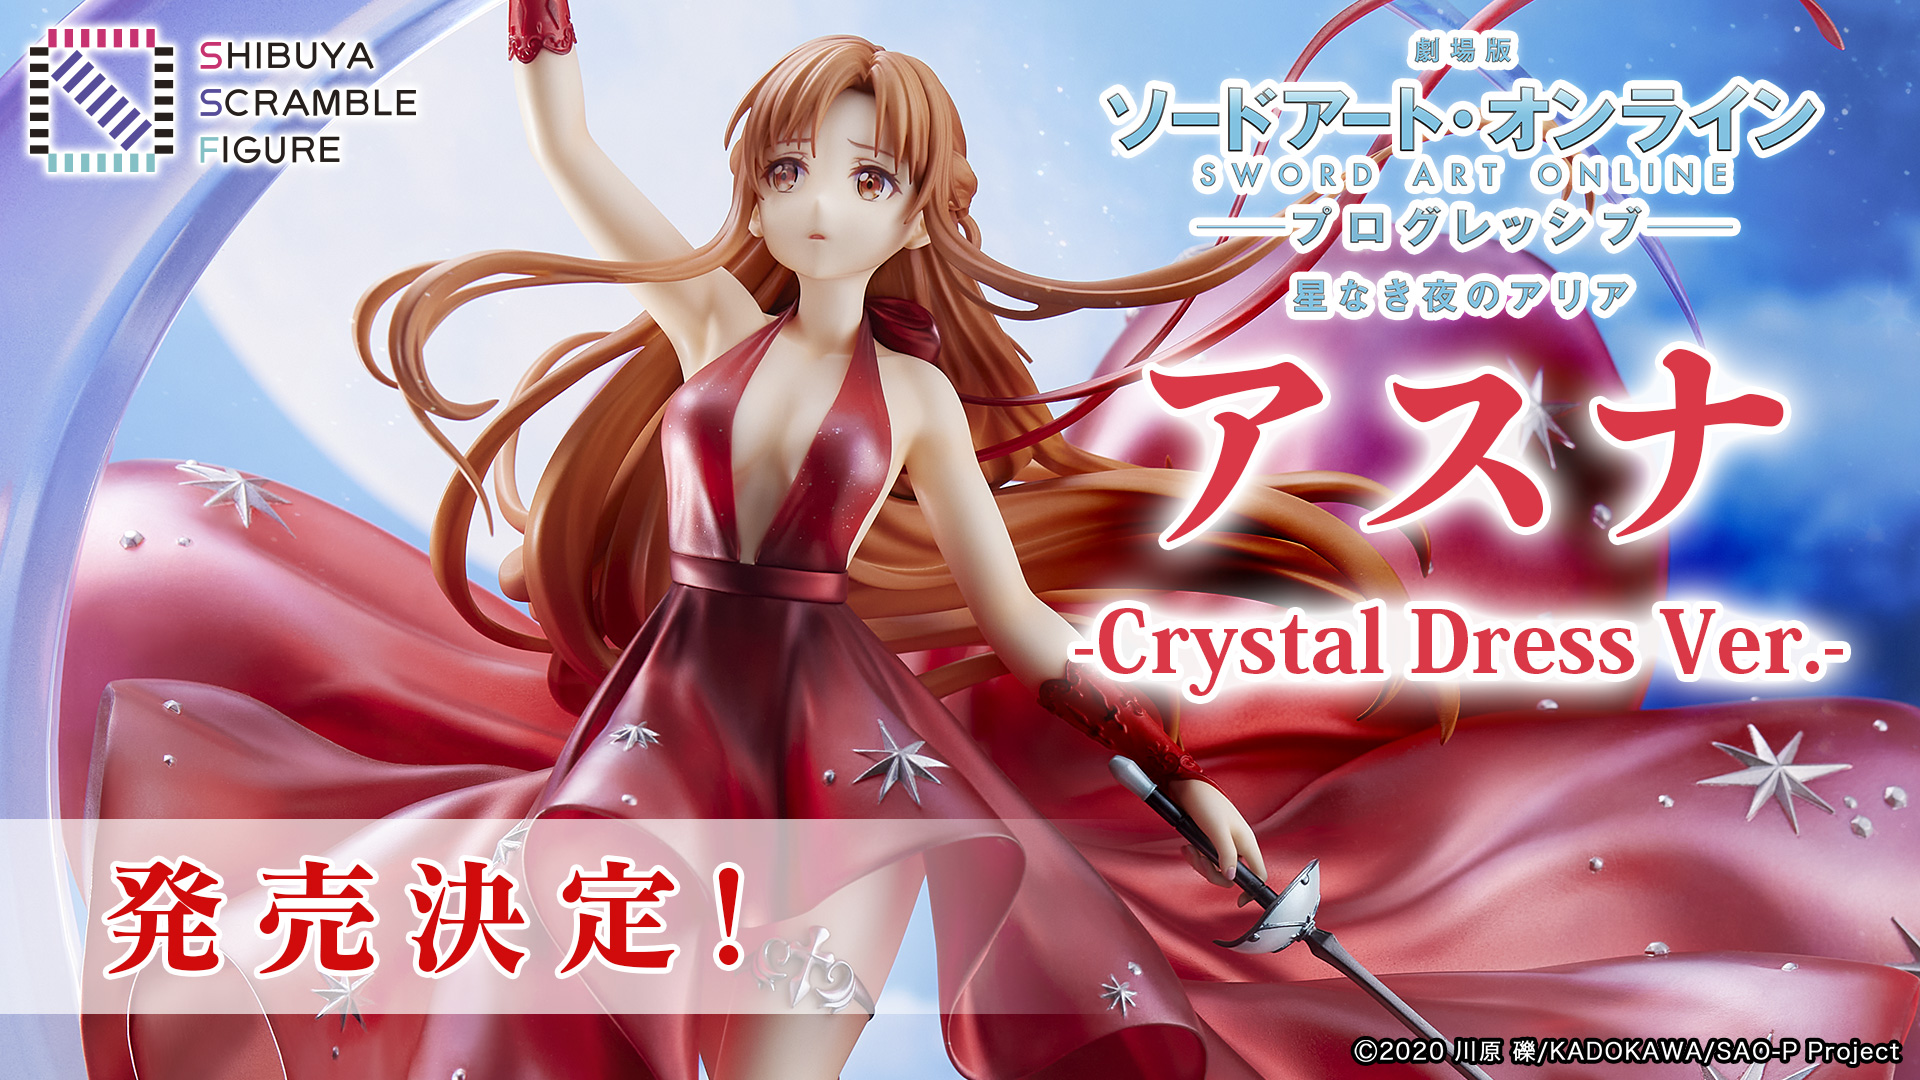 SHIBUYA SCRAMBLE FIGURE、『SAO』より、「アスナ -Crystal Dress Ver